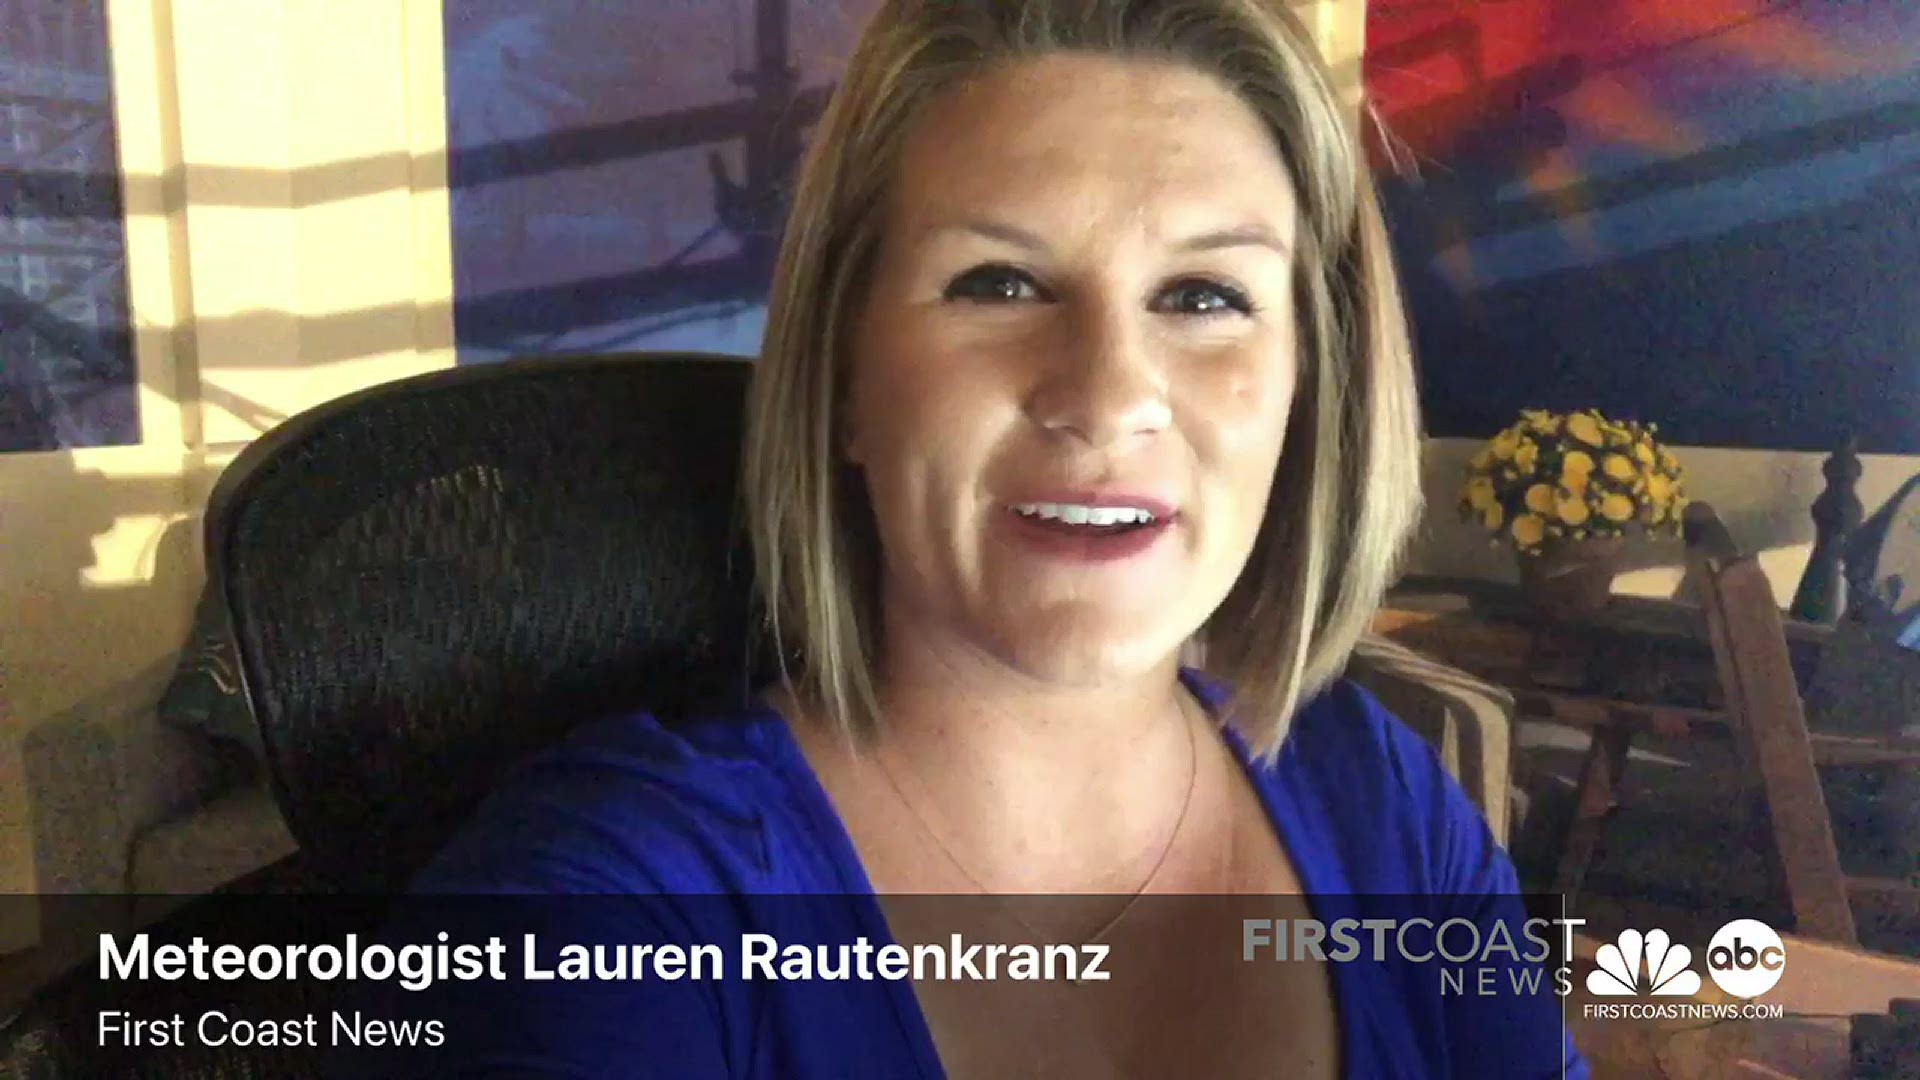 Meteorologist Lauren Rautenkranz is tracking a pleasant week ahead leading up to Thanksgiving.